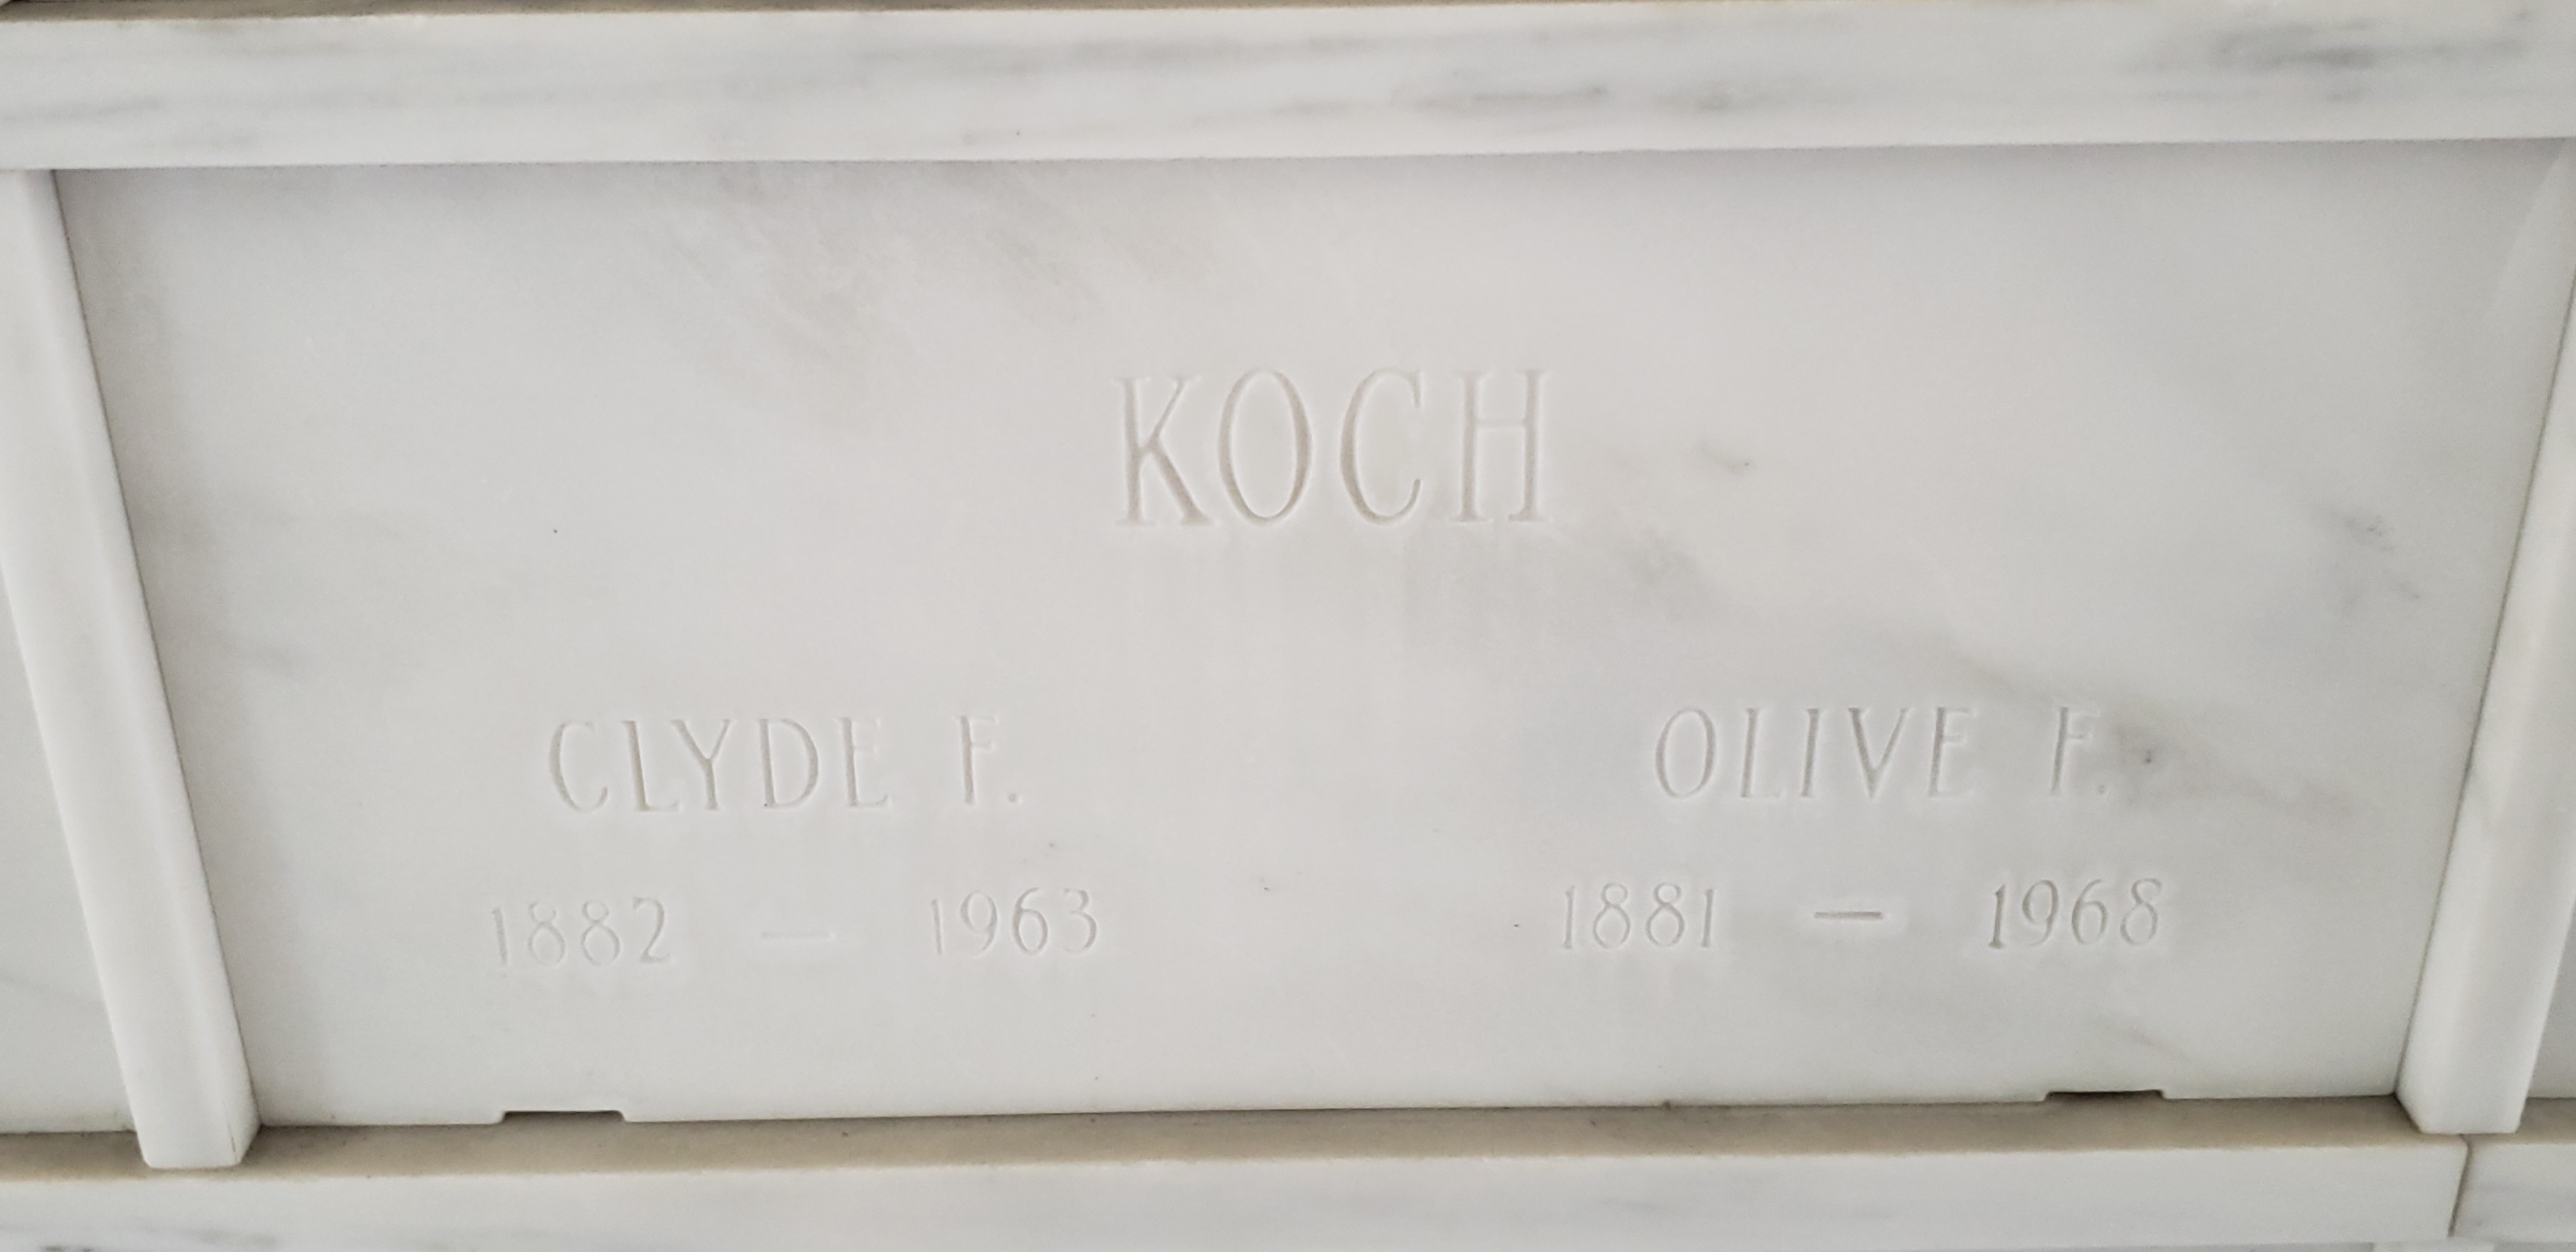 Clyde F Koch